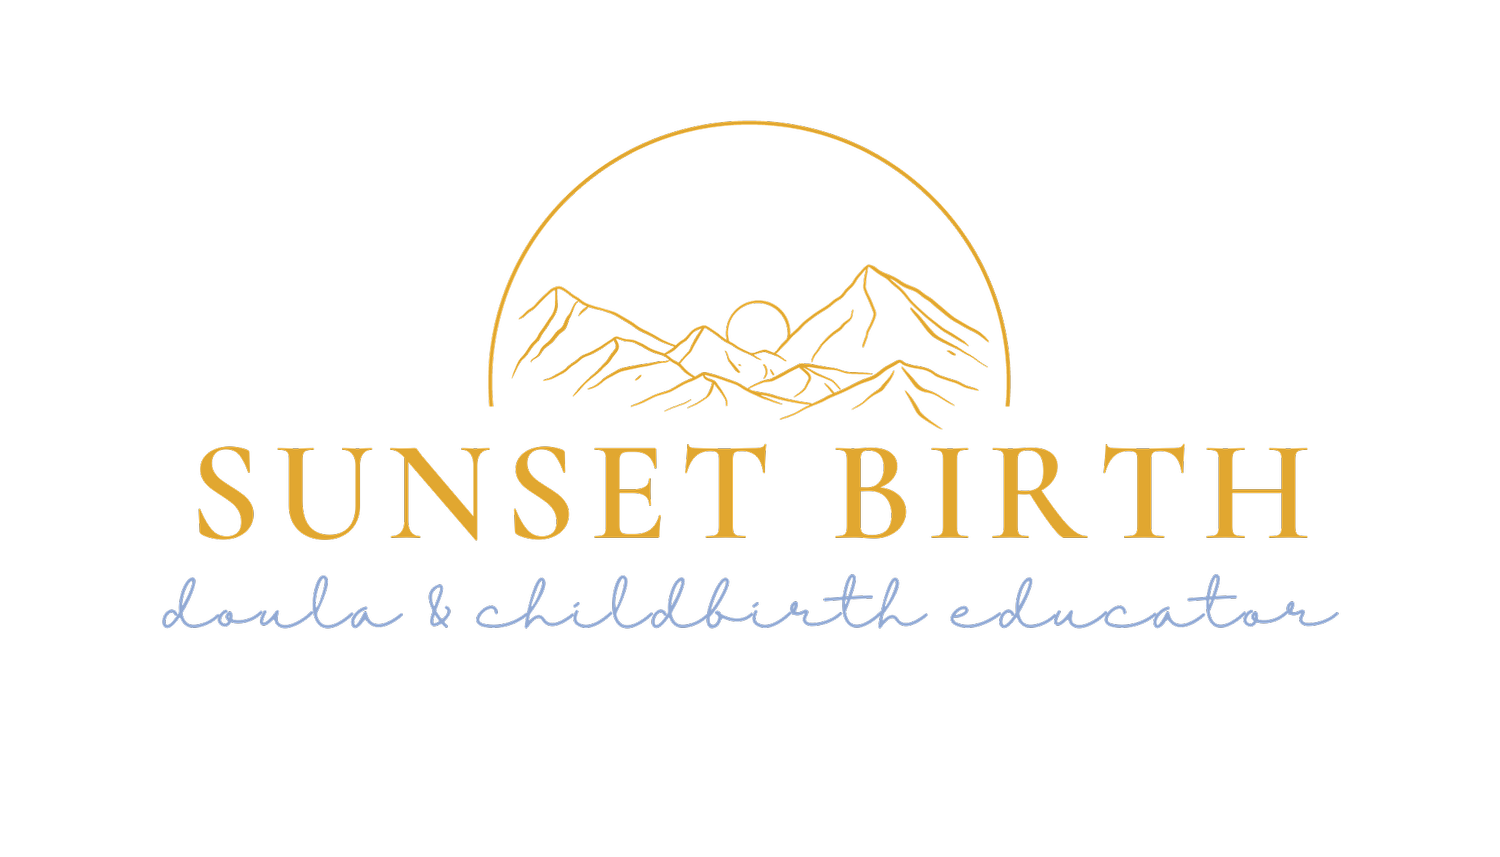 SUNSET BIRTH